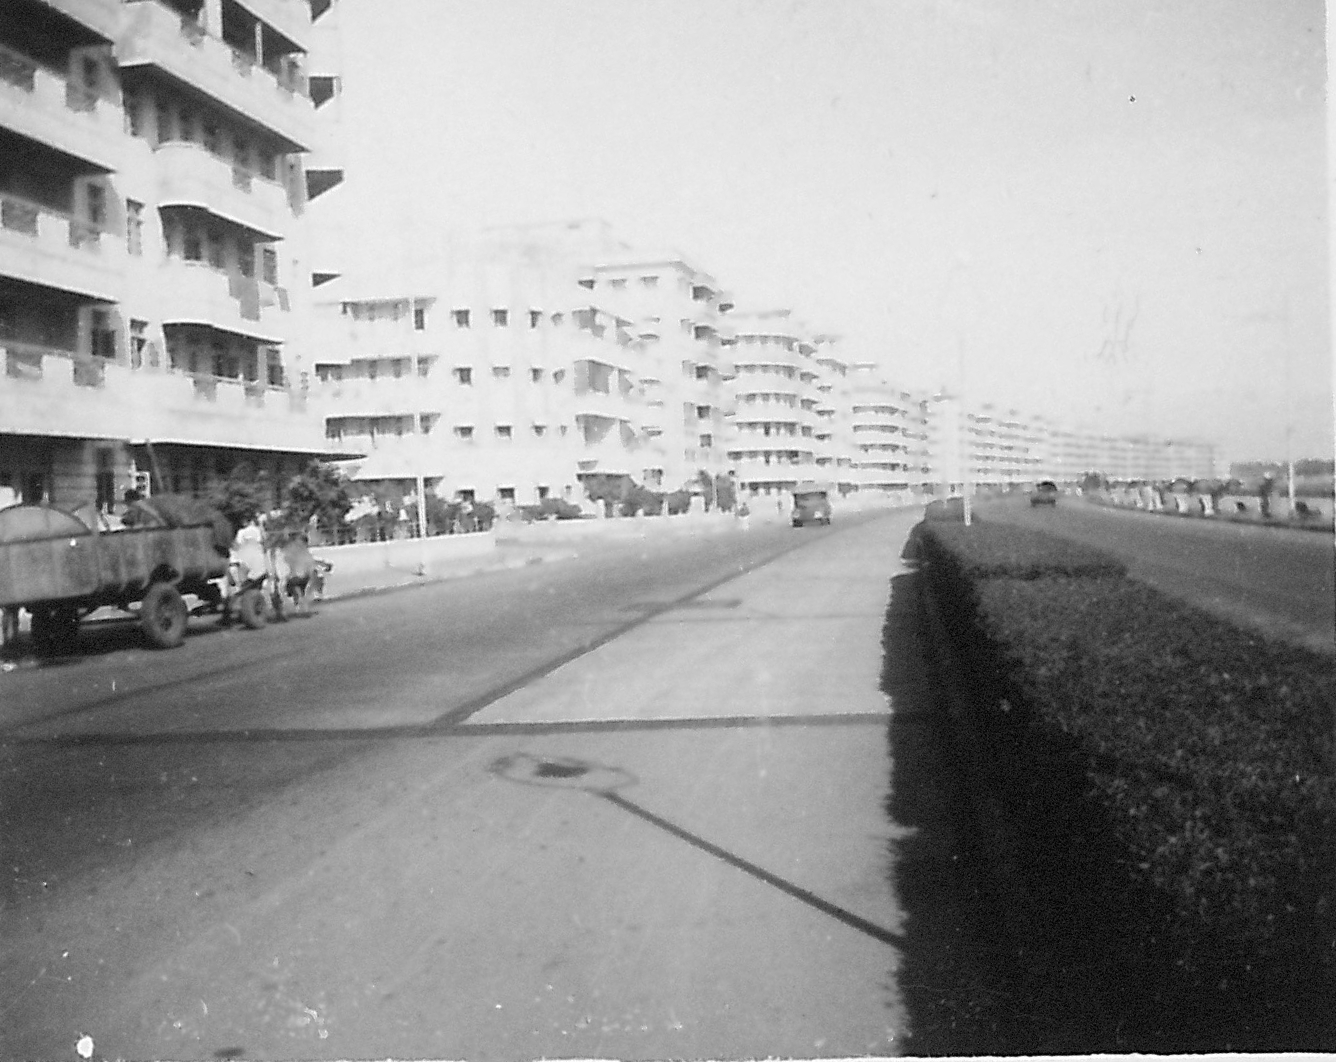 City scene, India, late 1944